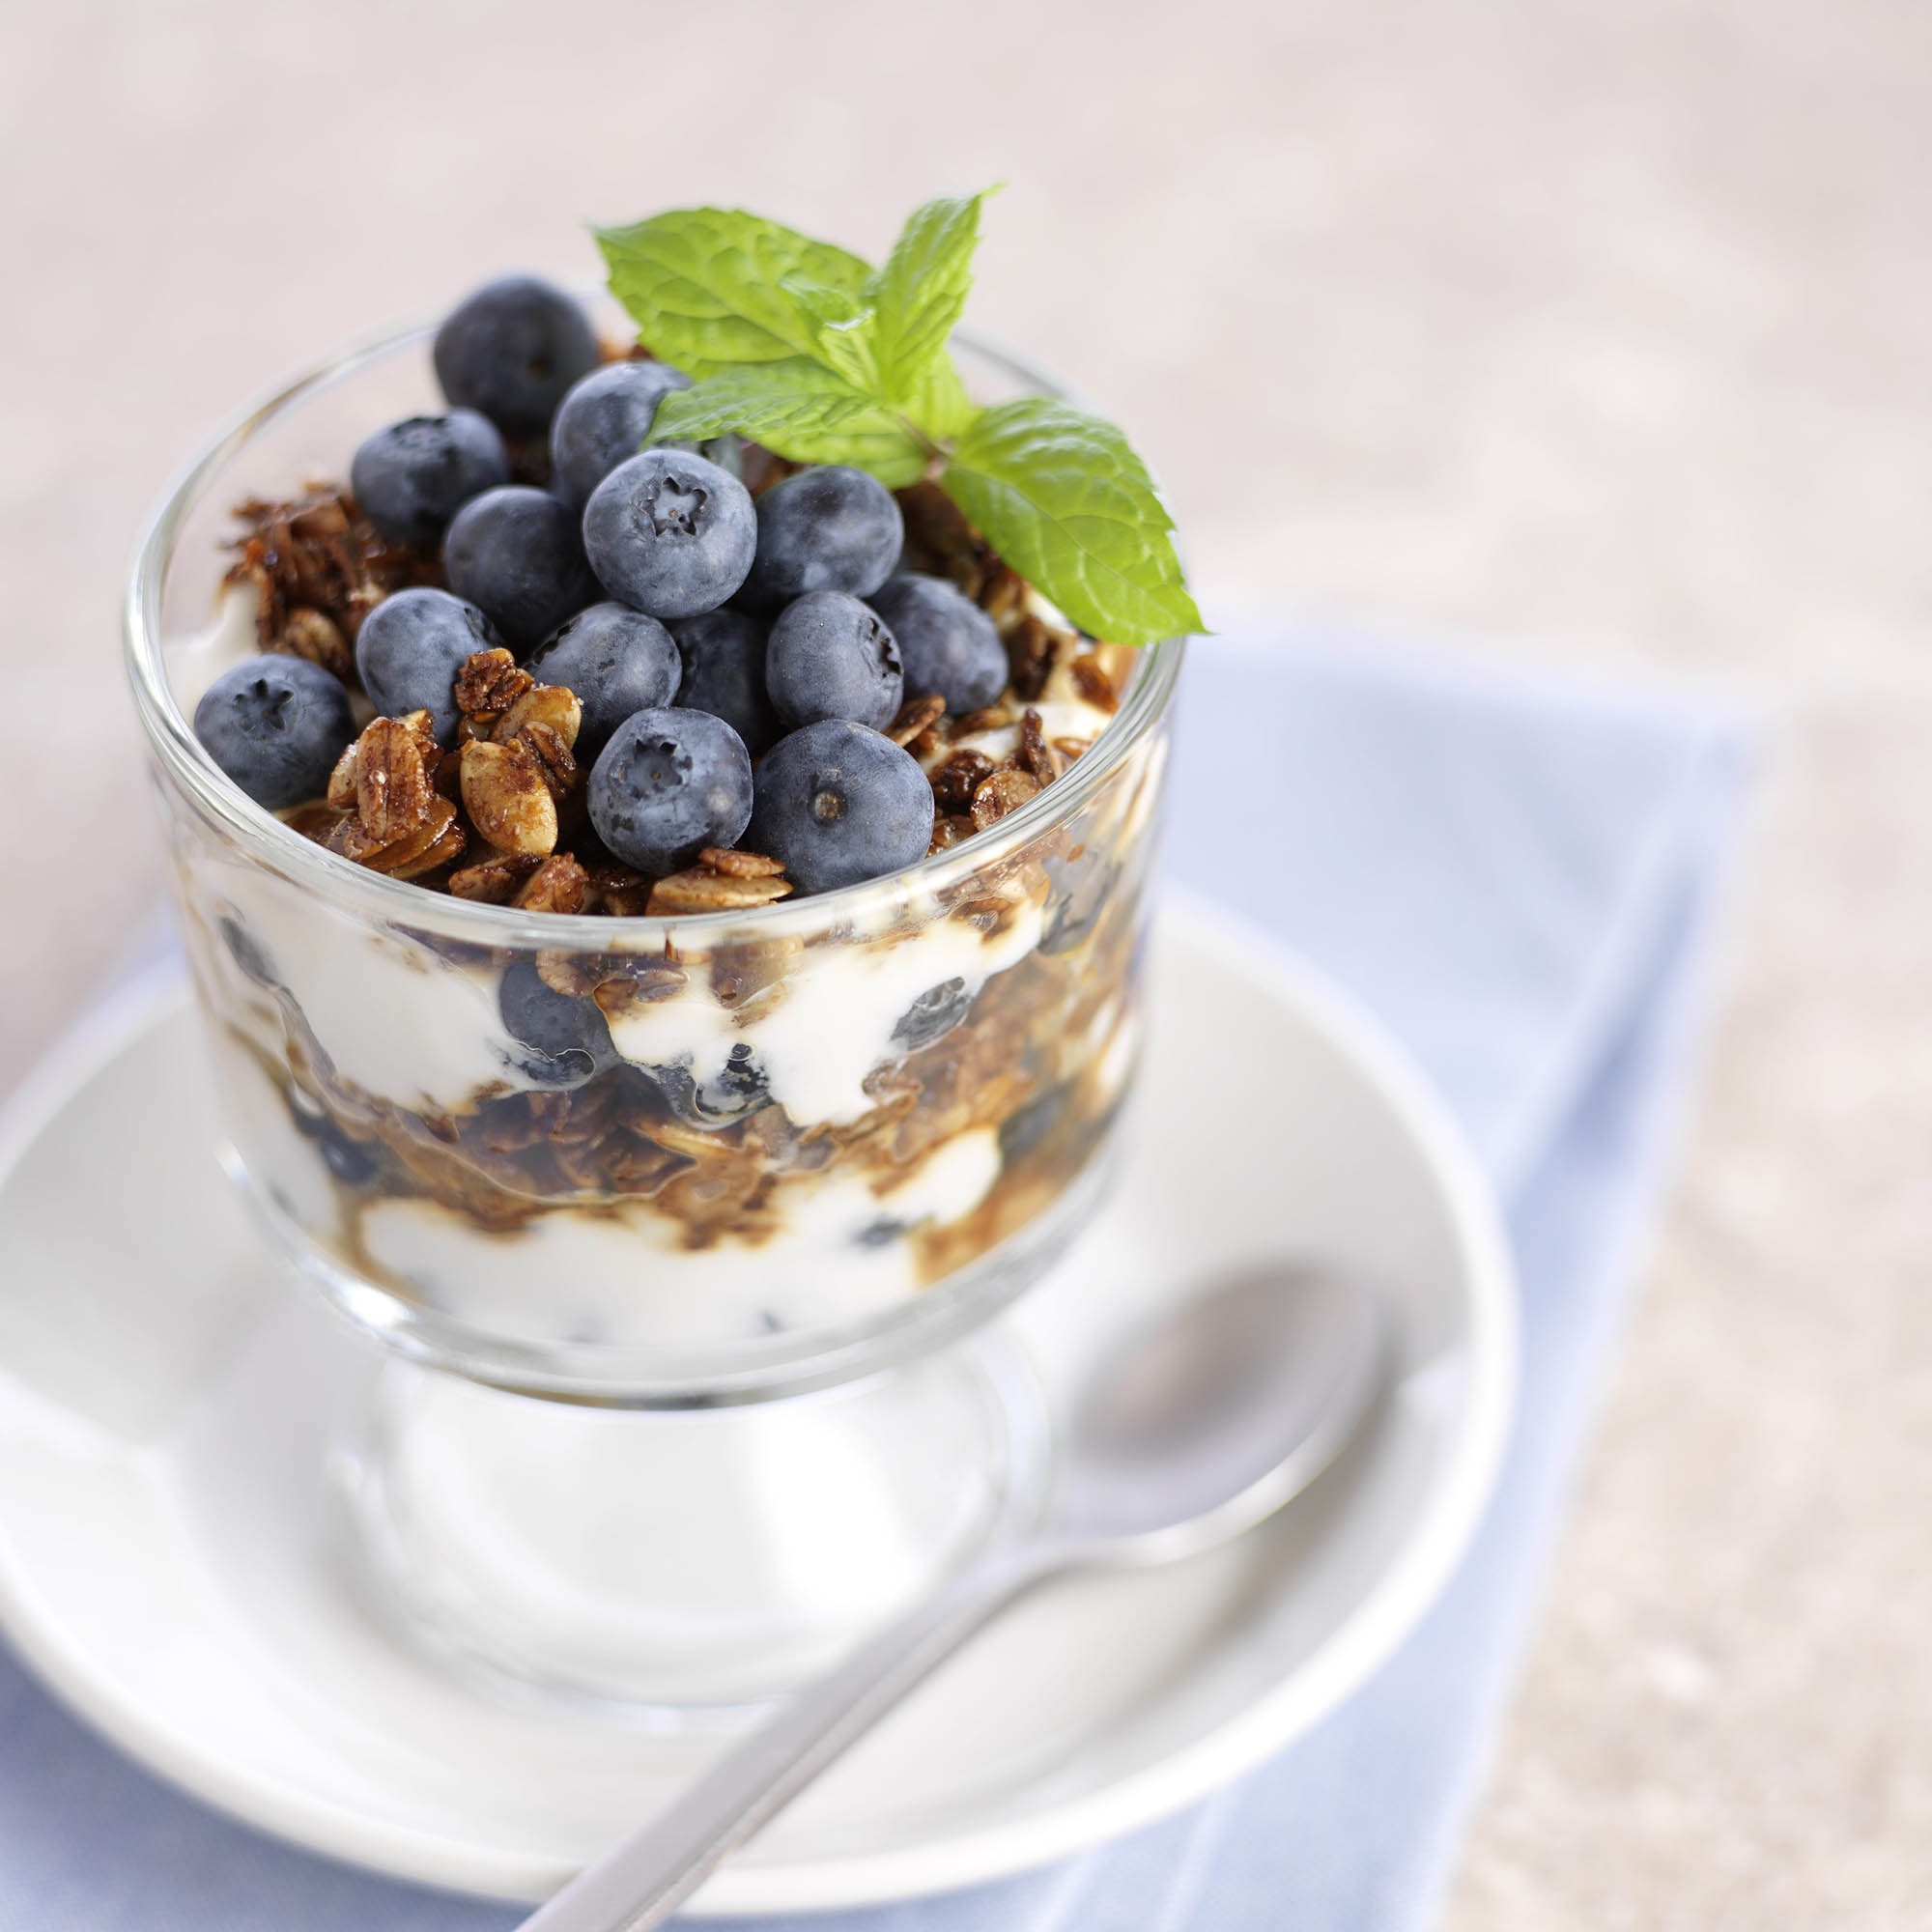 Parfait dessert with granola, blueberry, strawberry and yogurt